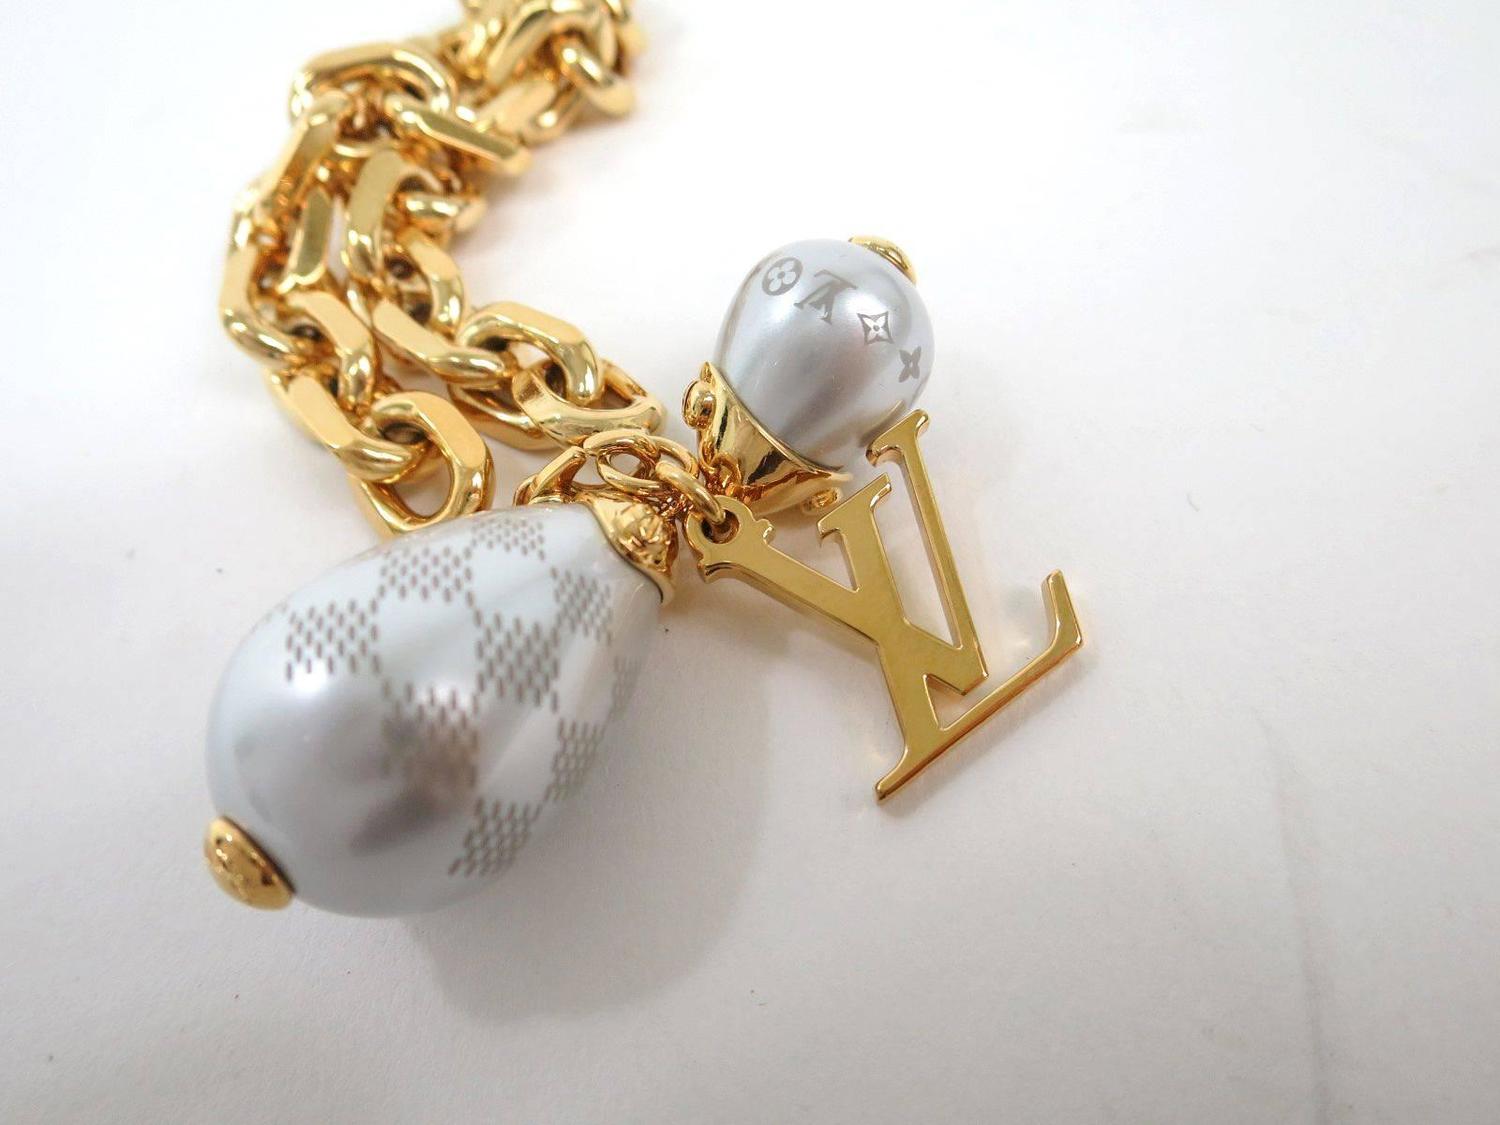 Louis Vuitton Monogram Damier Gold Pearl LV Charm Chain Link Bracelet in Box at 1stdibs